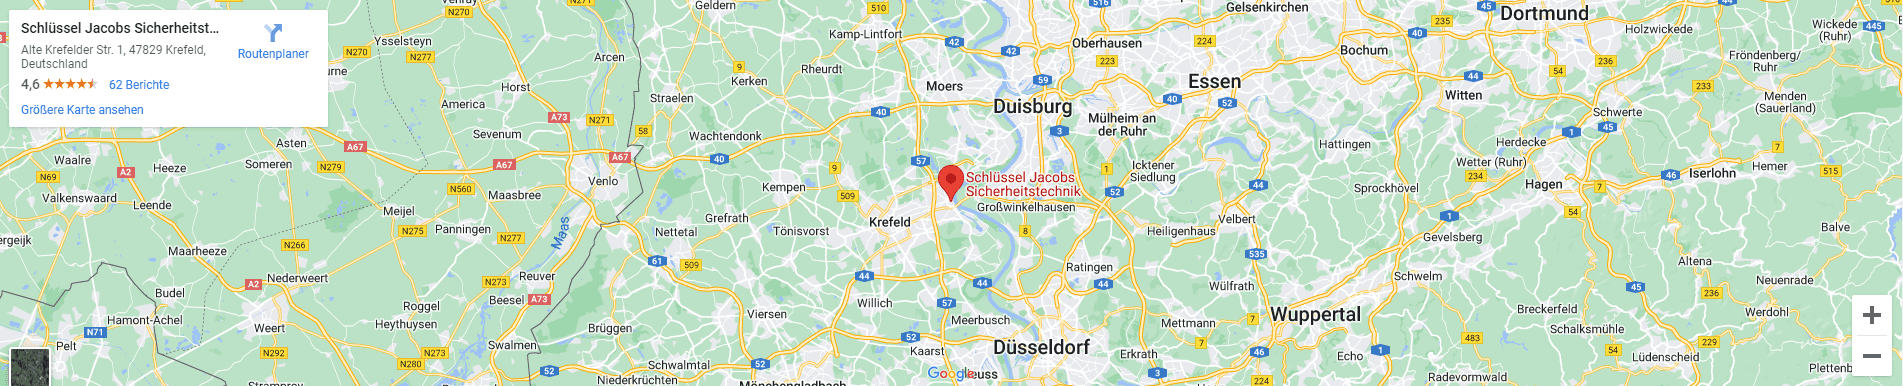 Tresore Krefeld Kontakt Google Maps